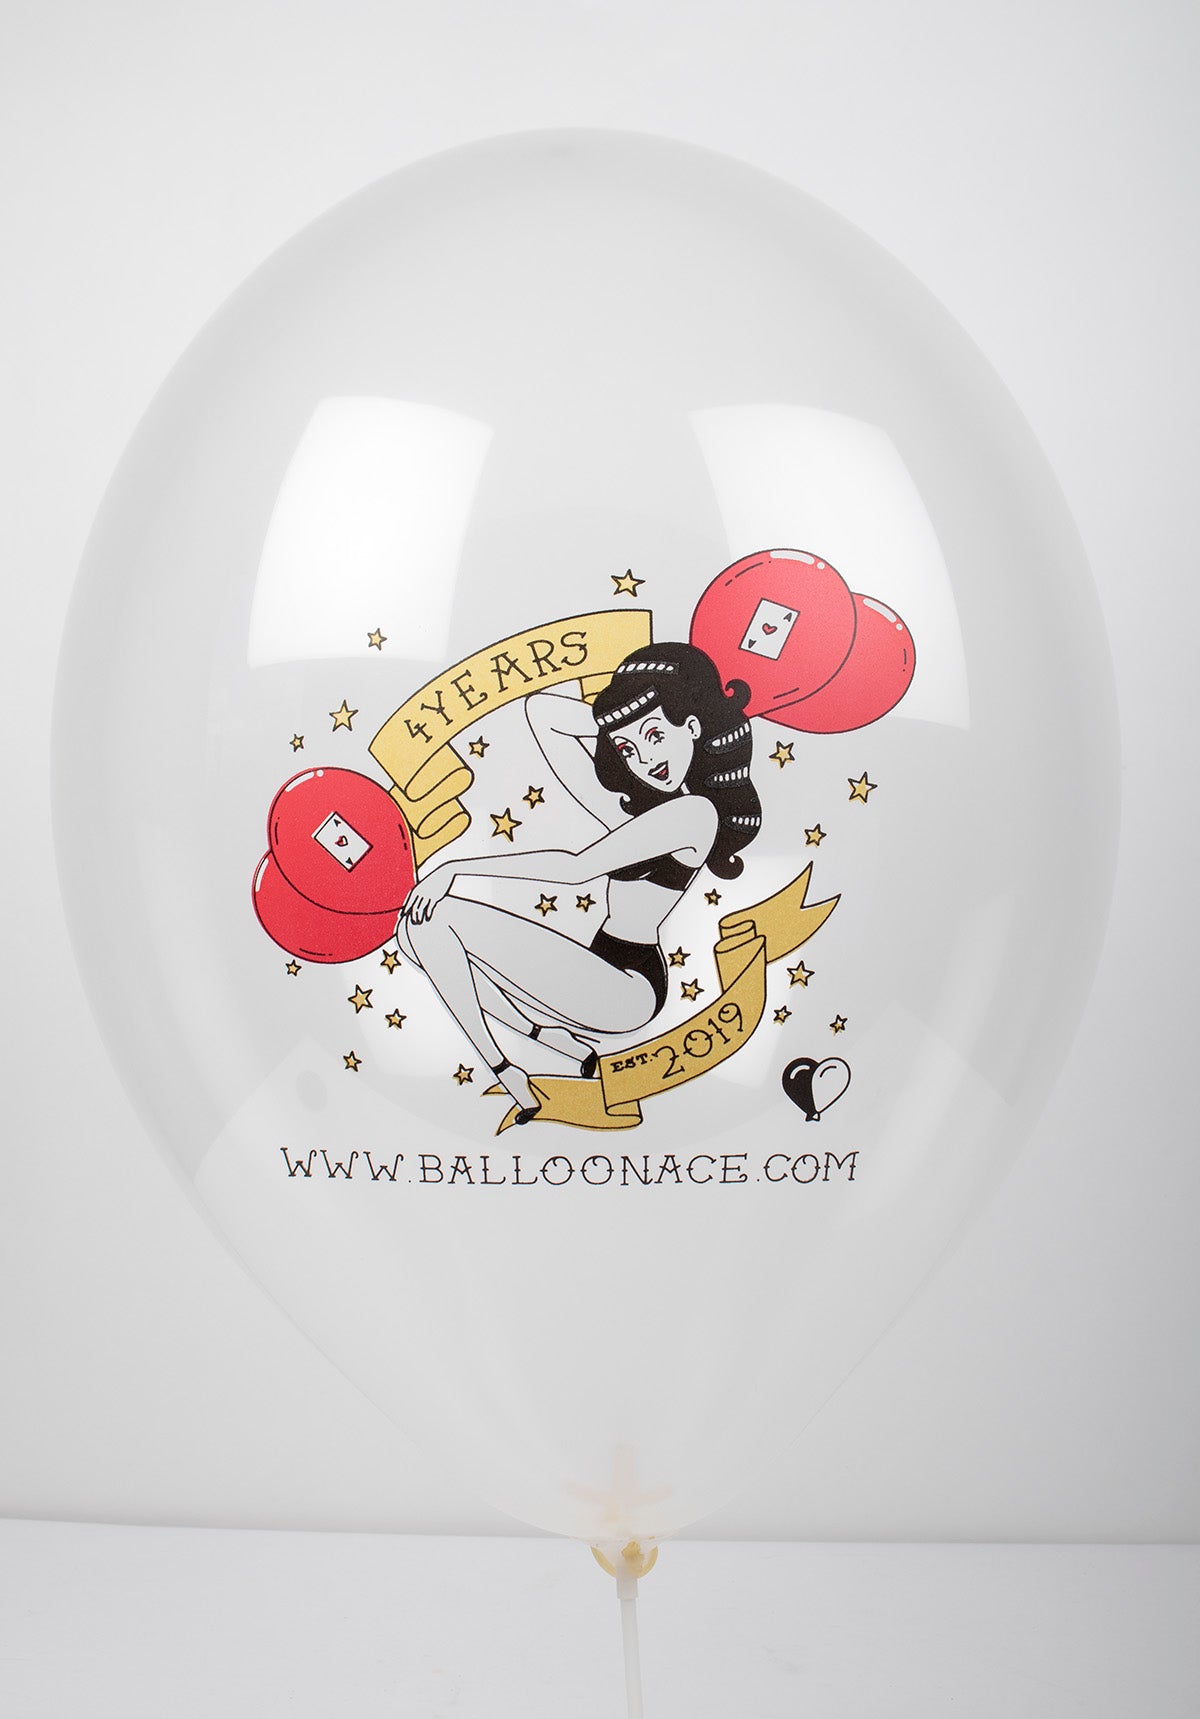 Balloon Ace four year anniversary logo (Belbal) 14" round balloons